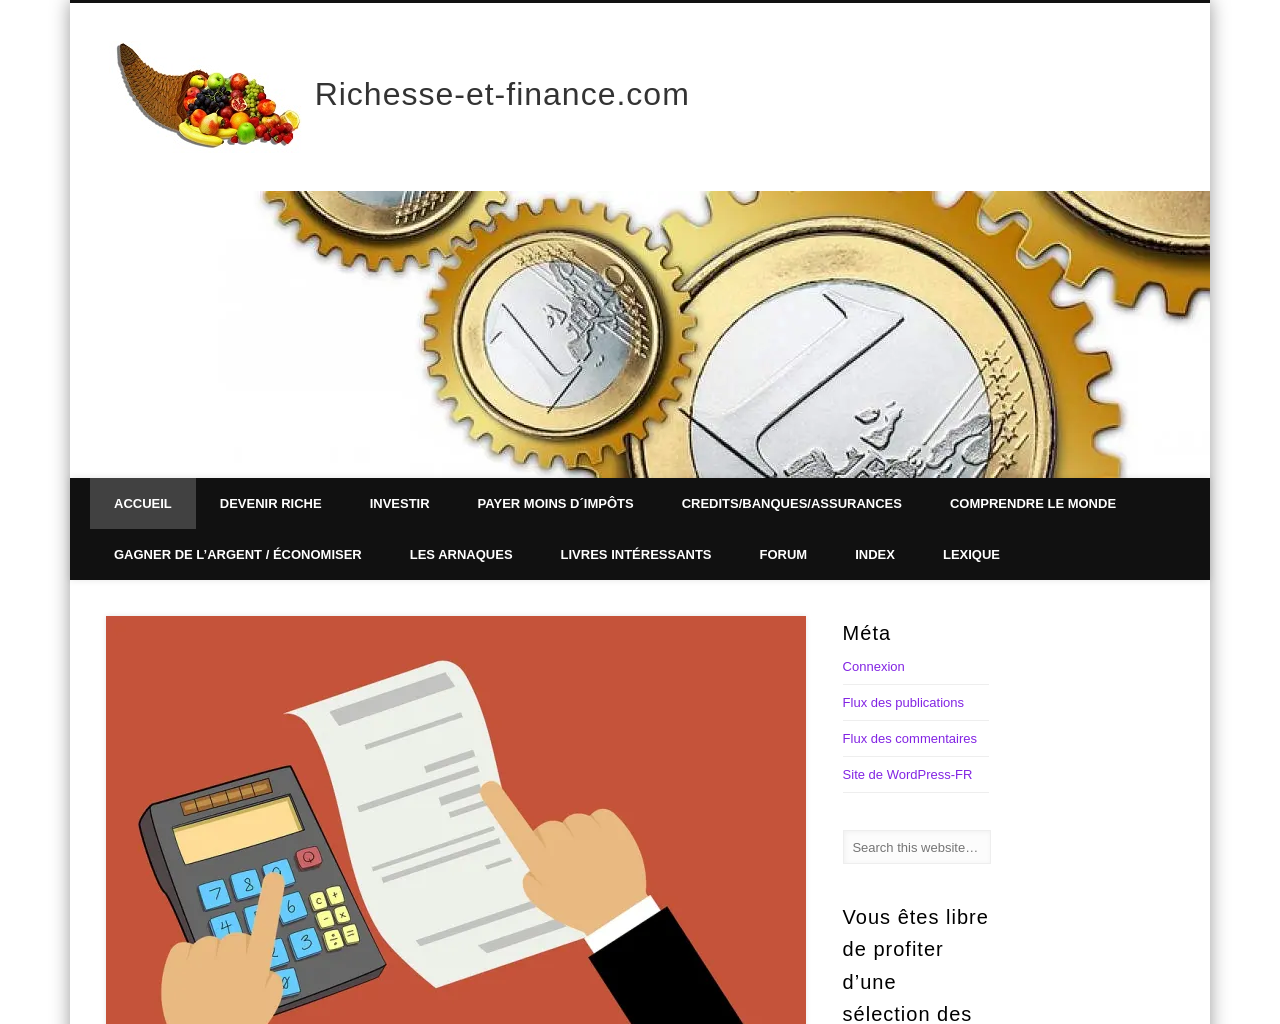 richesse-et-finance.com